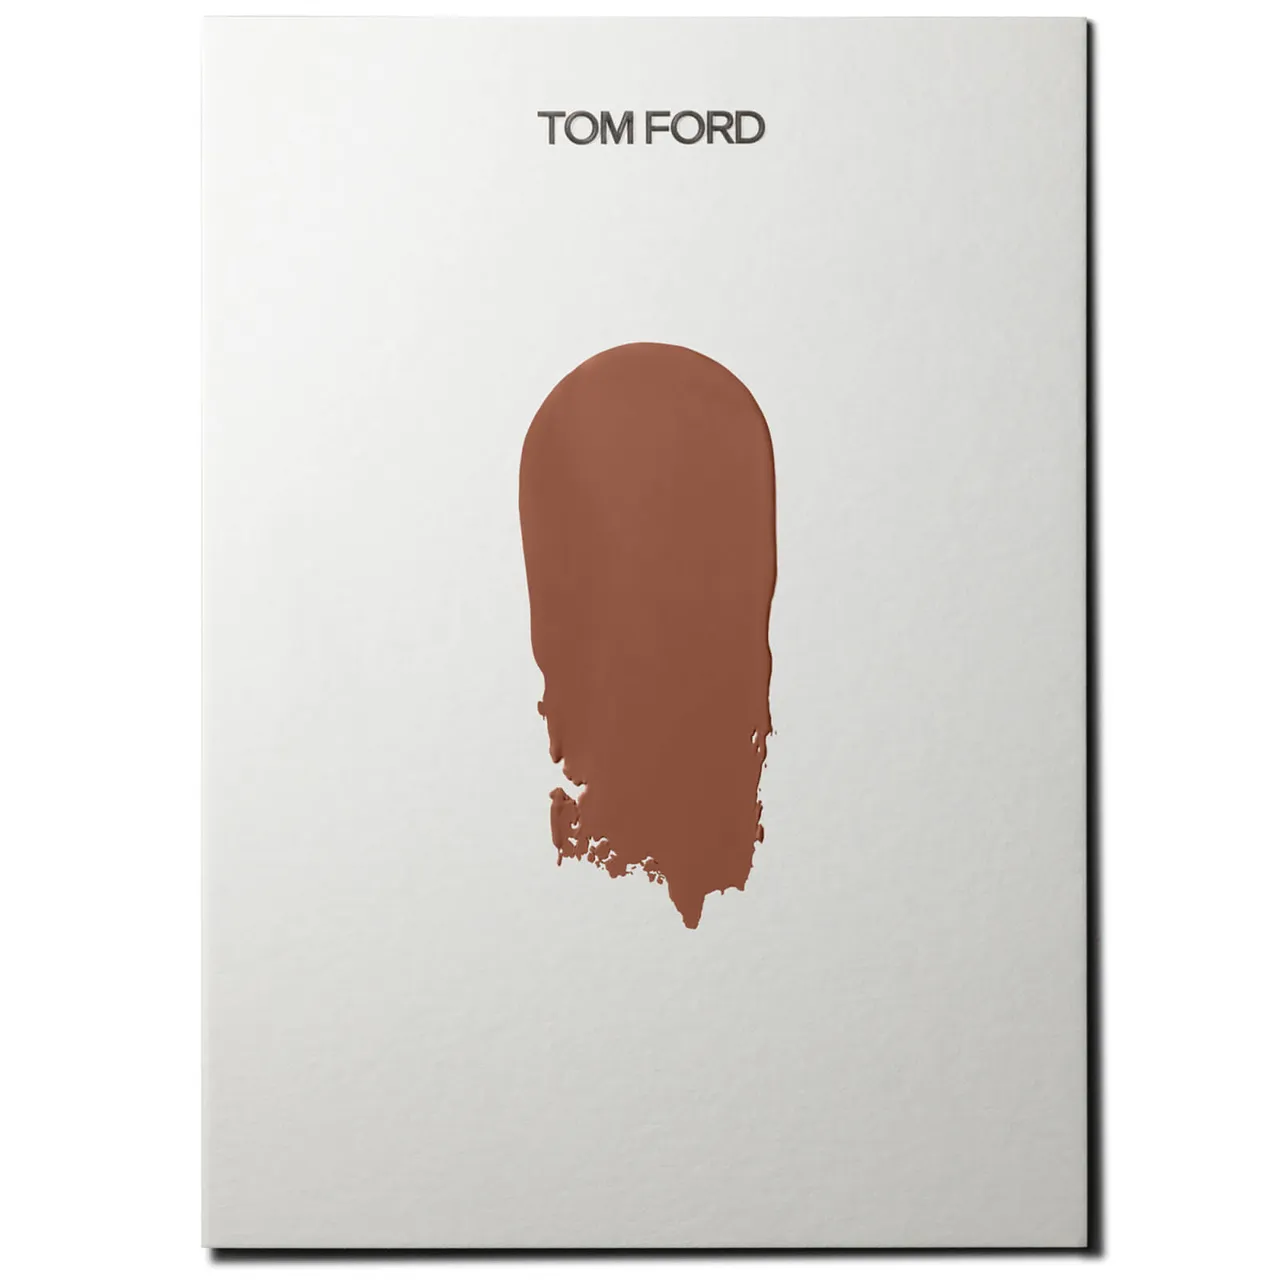 Tom Ford Traceless Foundation Stick 15g (Various Shades) - 11.0 Dusk